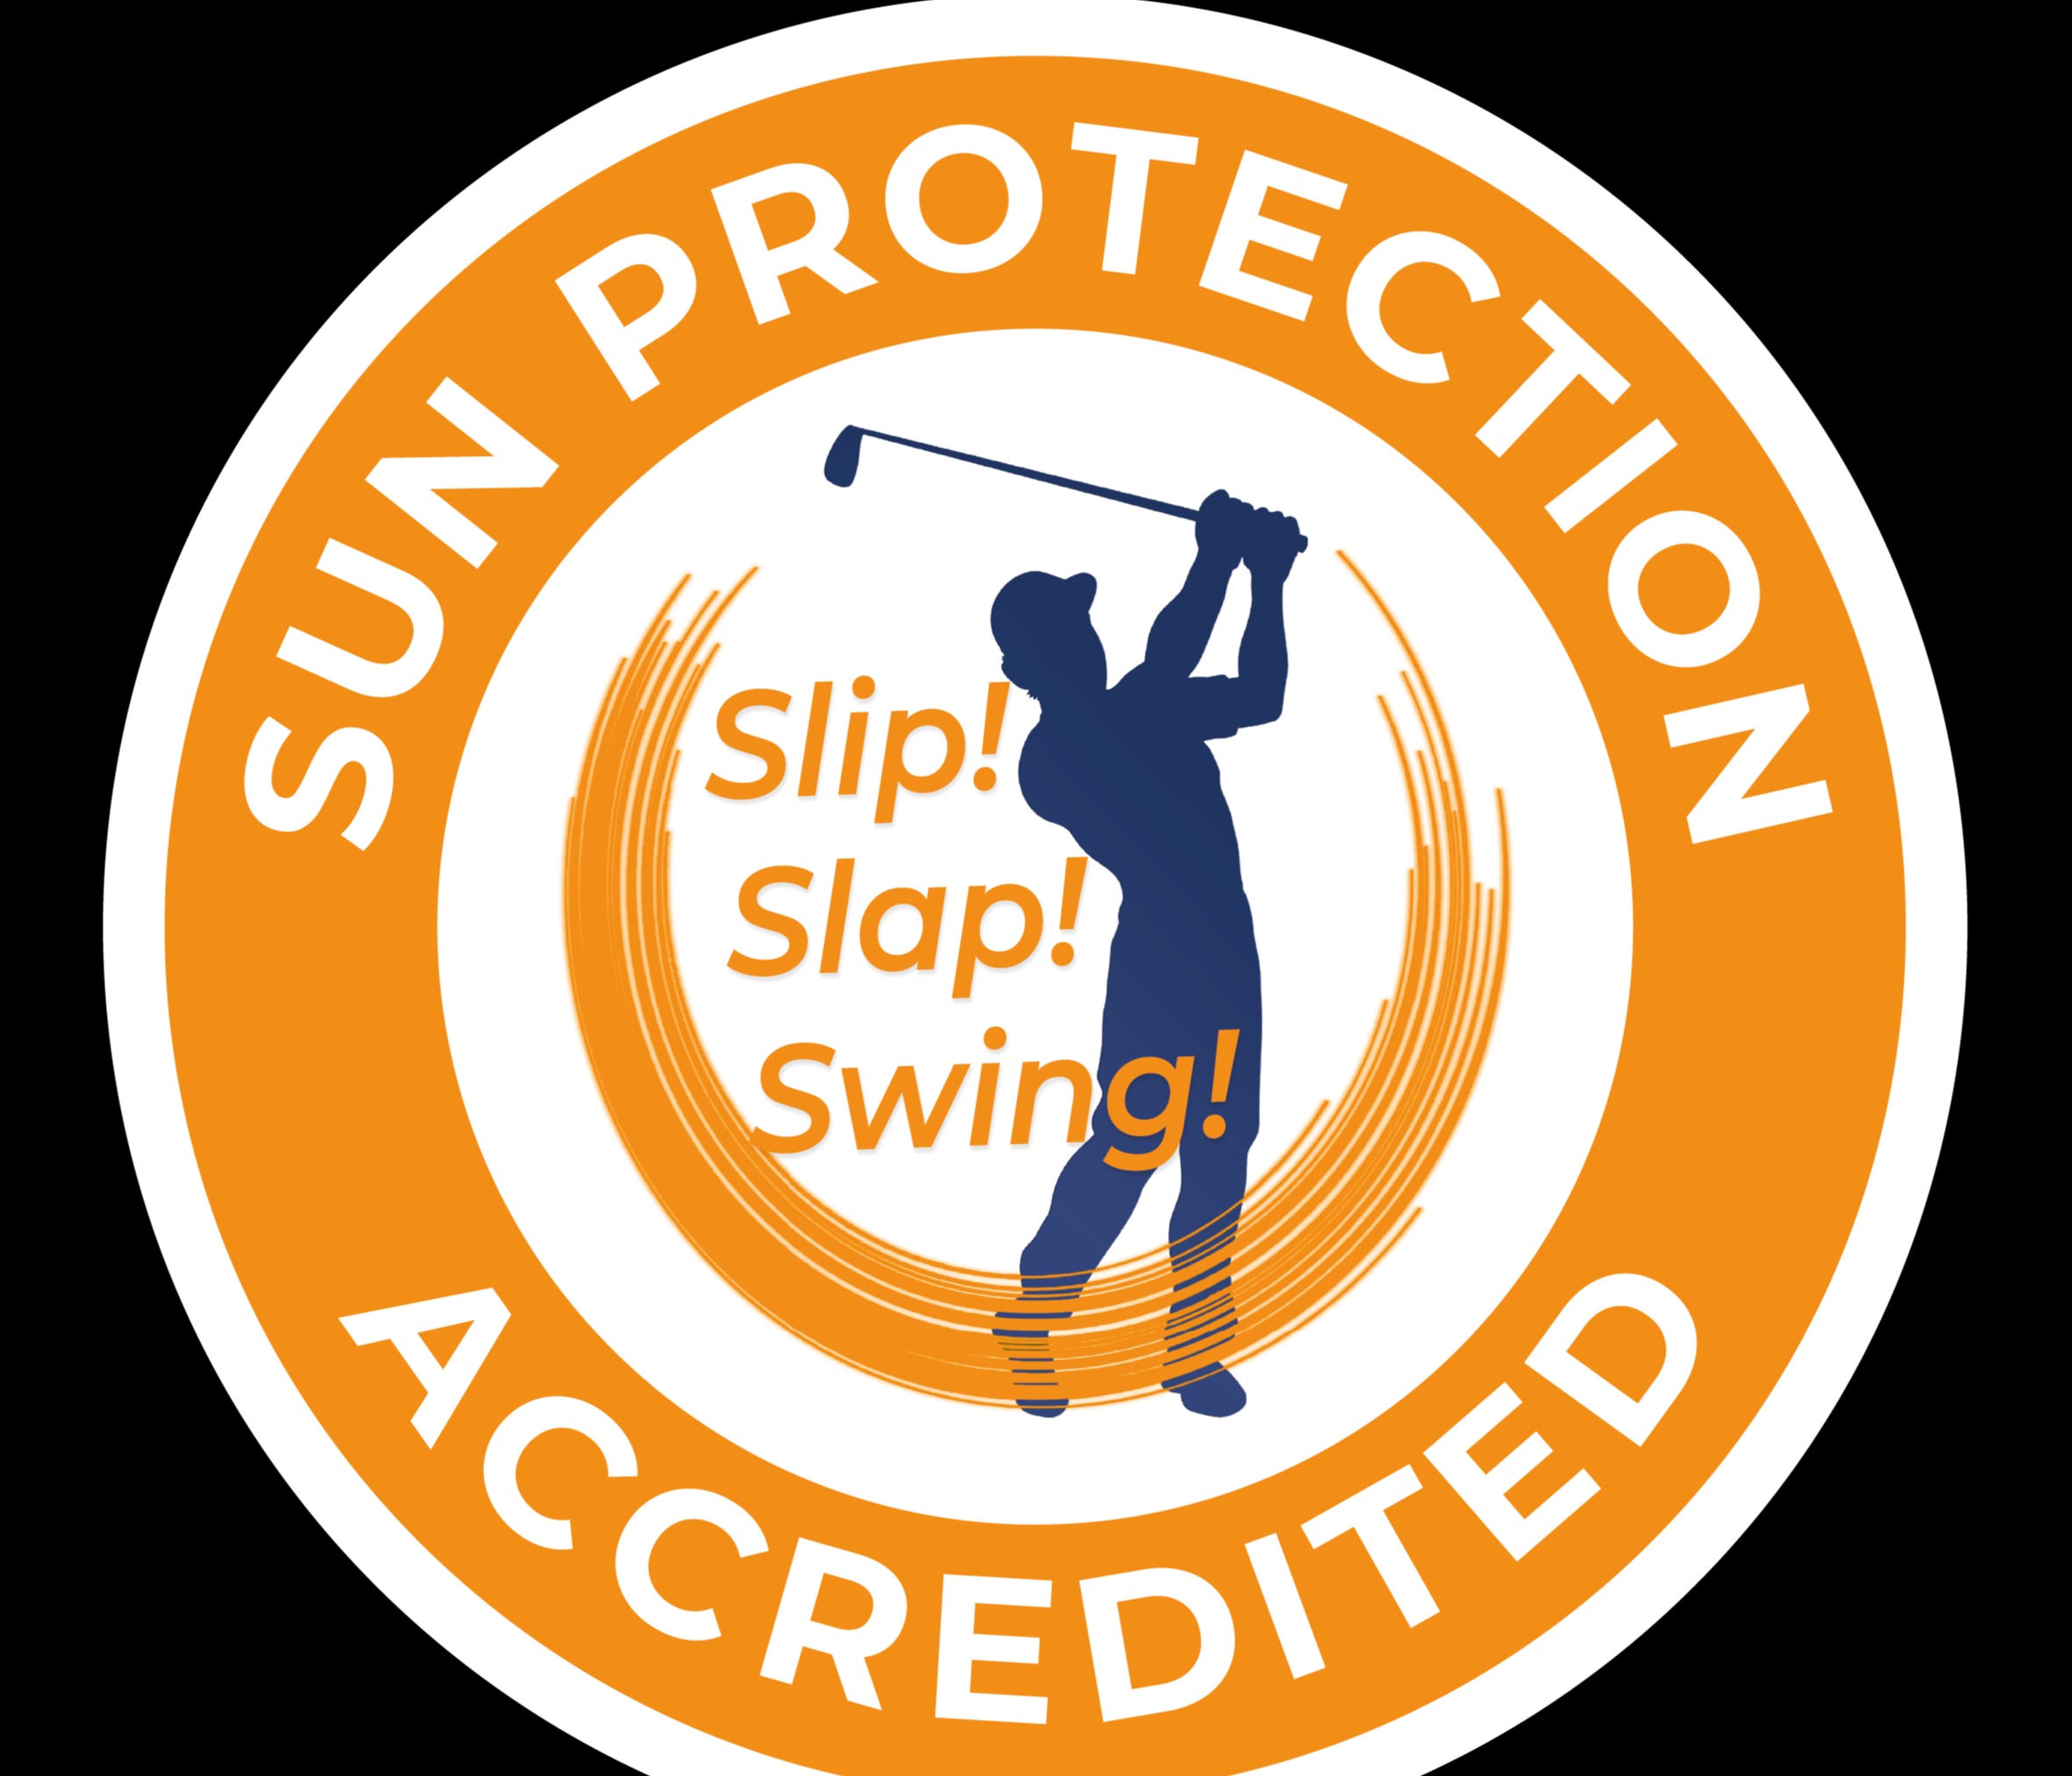 Hollandbush are sun protection accredited